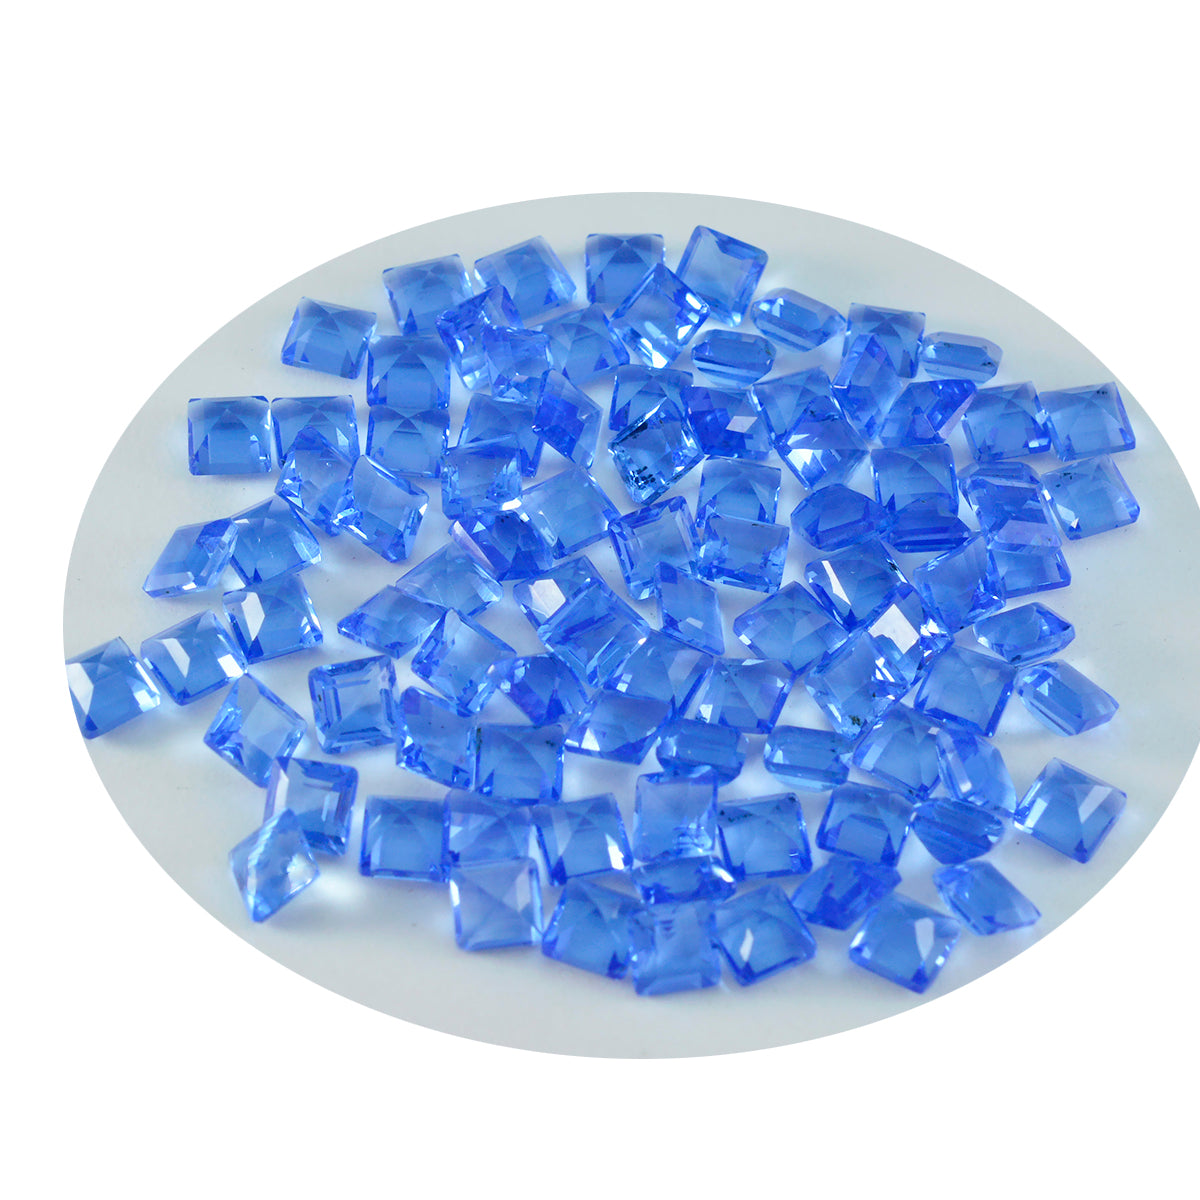 riyogems 1 st blå safir cz fasetterad 3x3 mm fyrkantig form a+1 kvalitets lösa ädelstenar